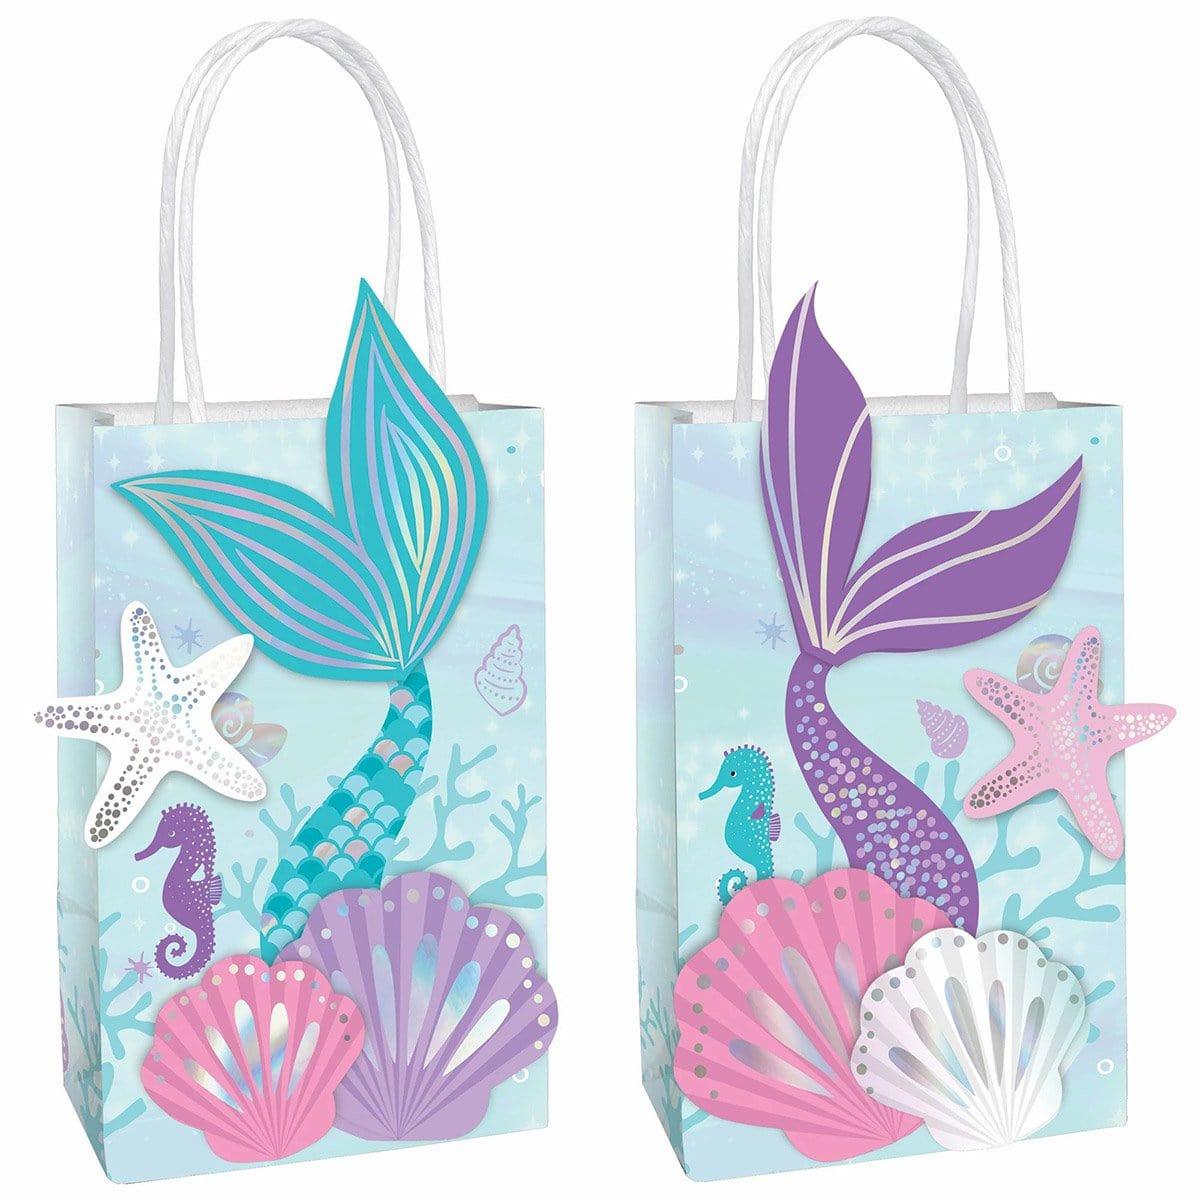 Buy Kids Birthday Mermaid Paper Bag, 8 Count sold at Party Expert